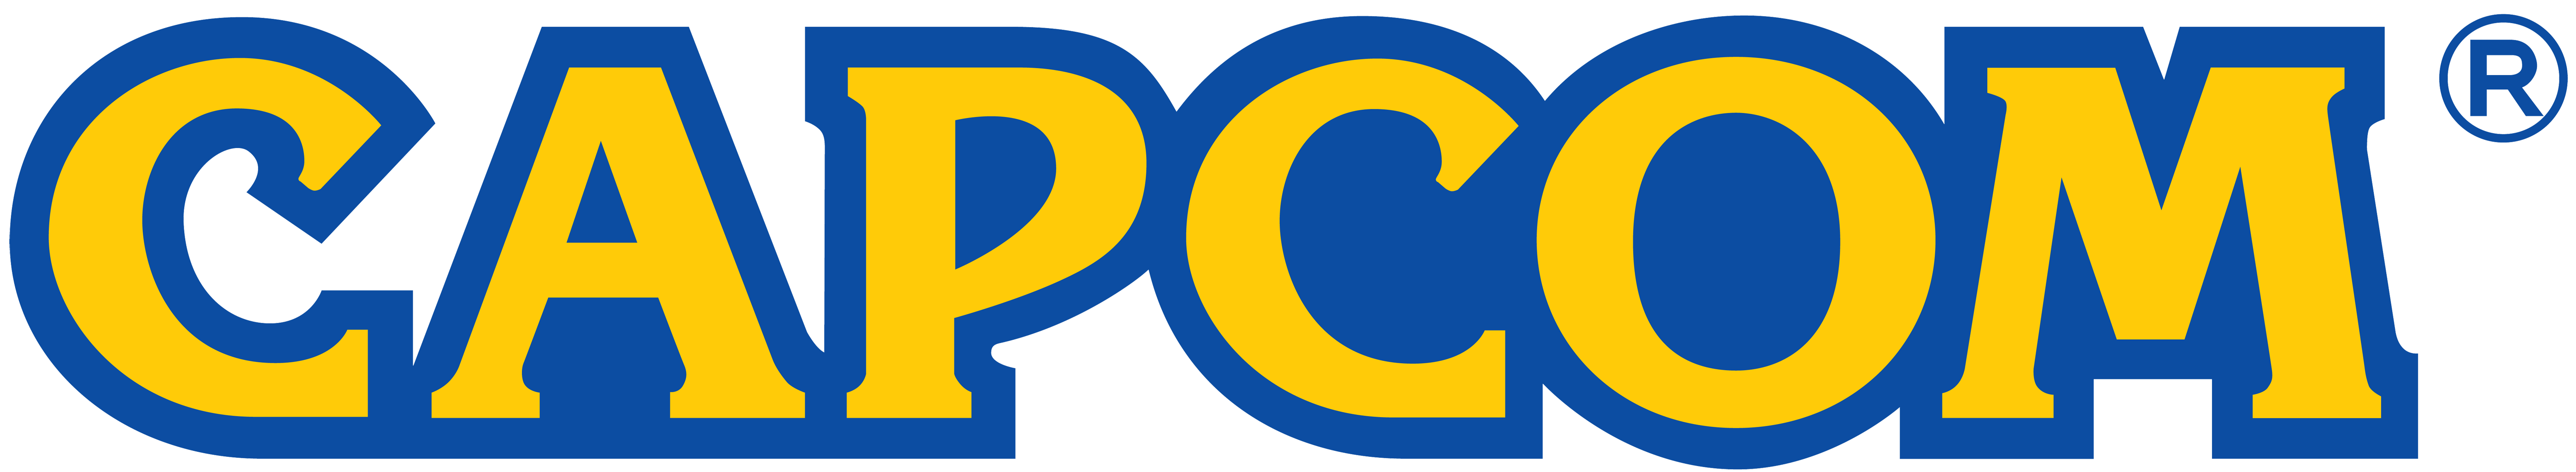 File:Official Eurogamer logo.svg - Wikipedia